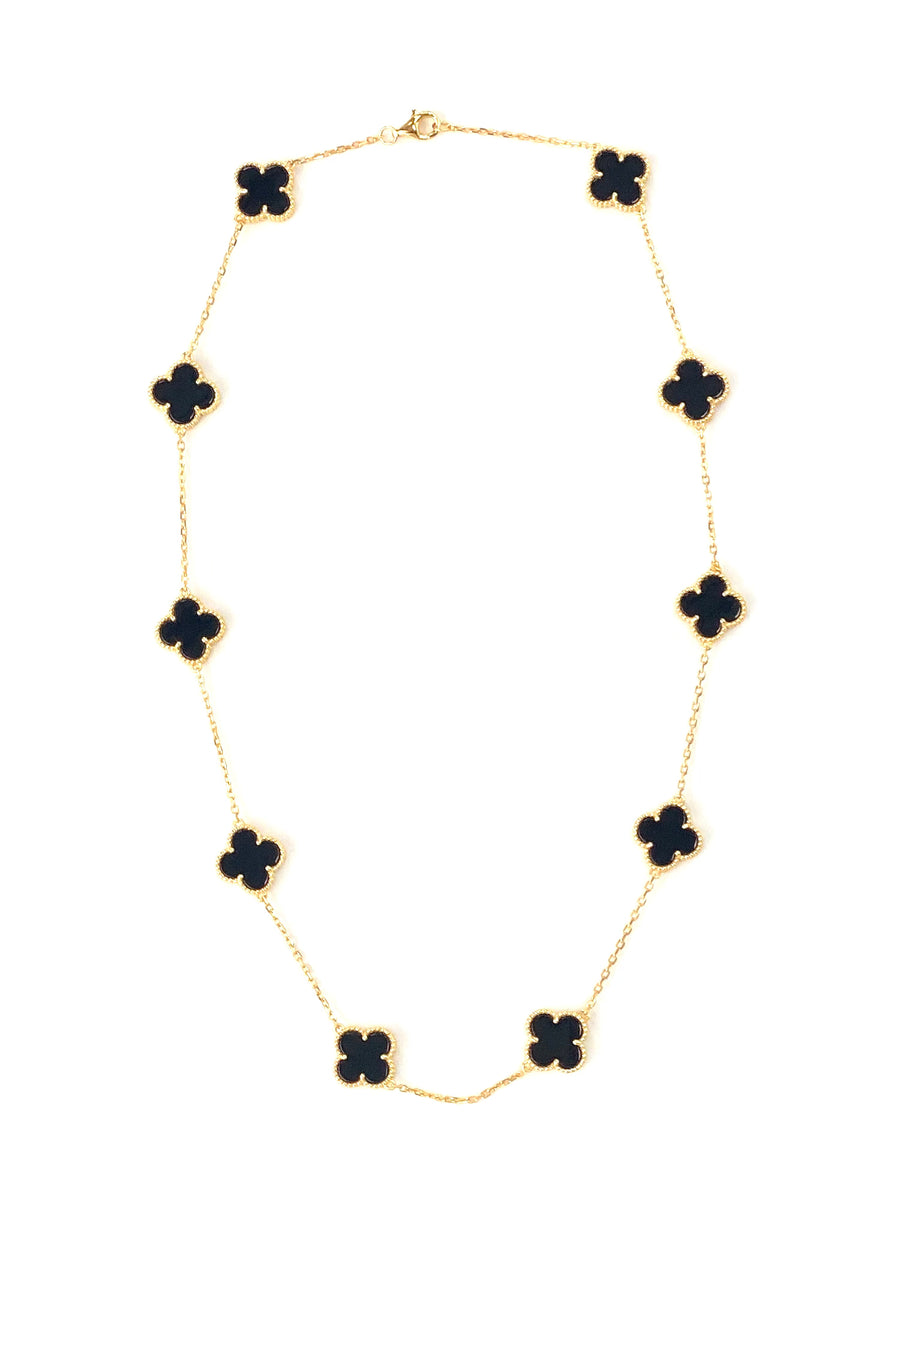 Short black agate necklace